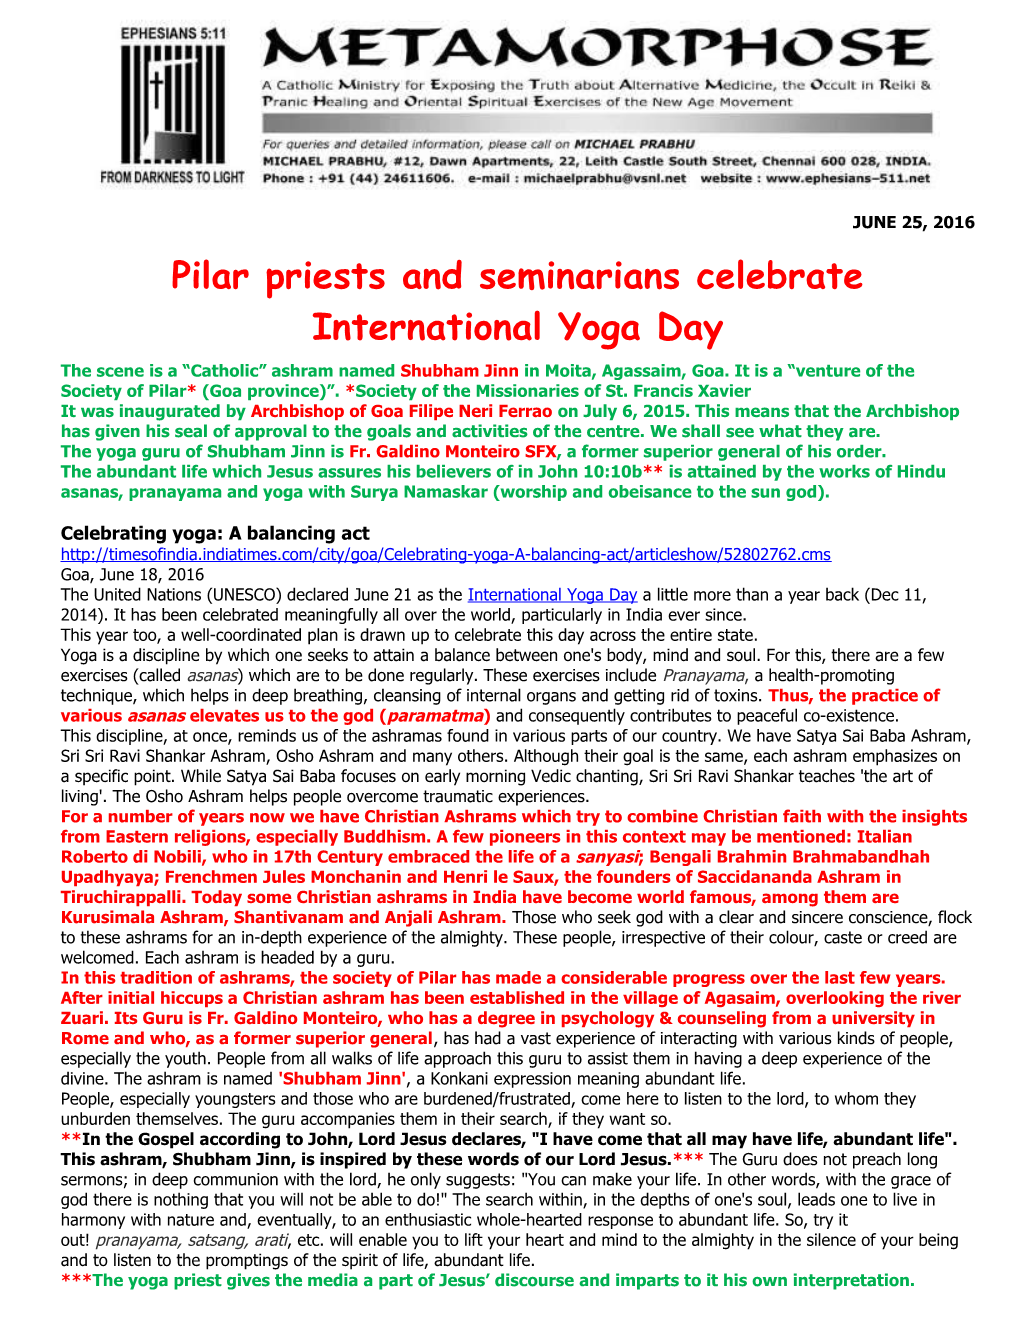 Pilar Priests and Seminarians Celebrate International Yoga Day